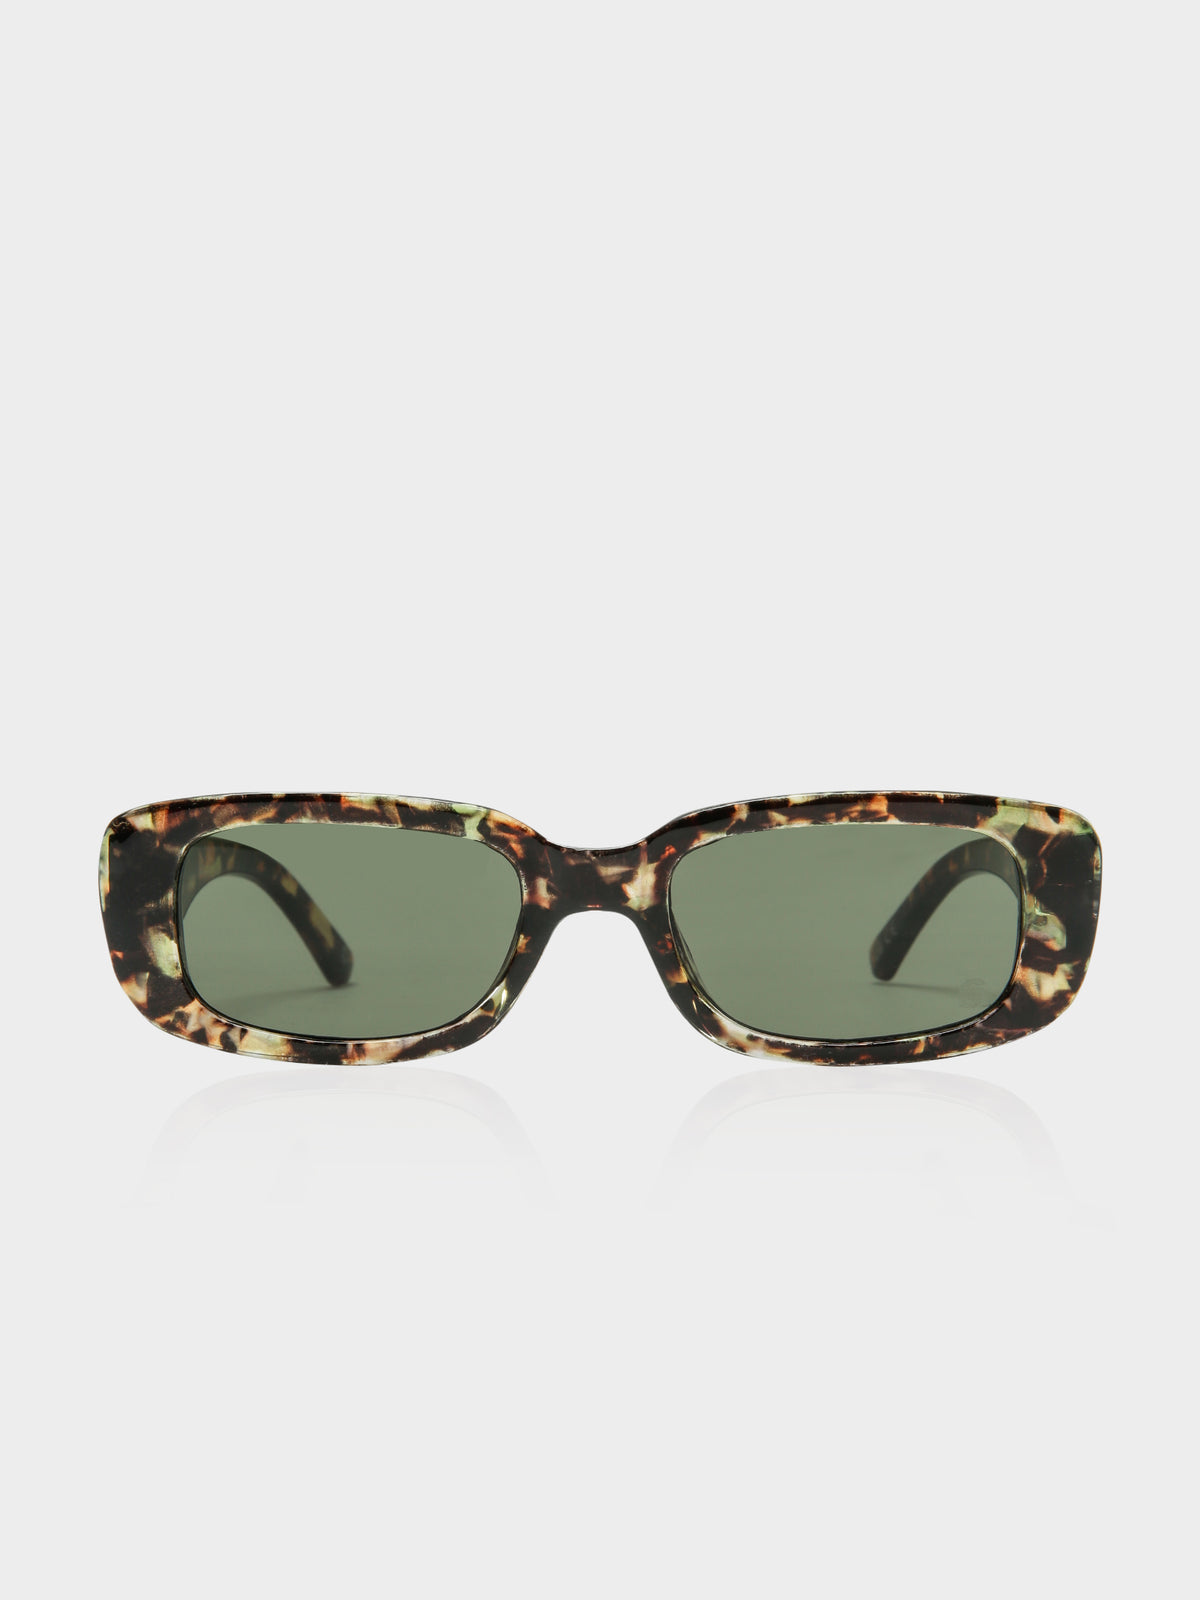 Dollin Sunglasses in Jaded Green